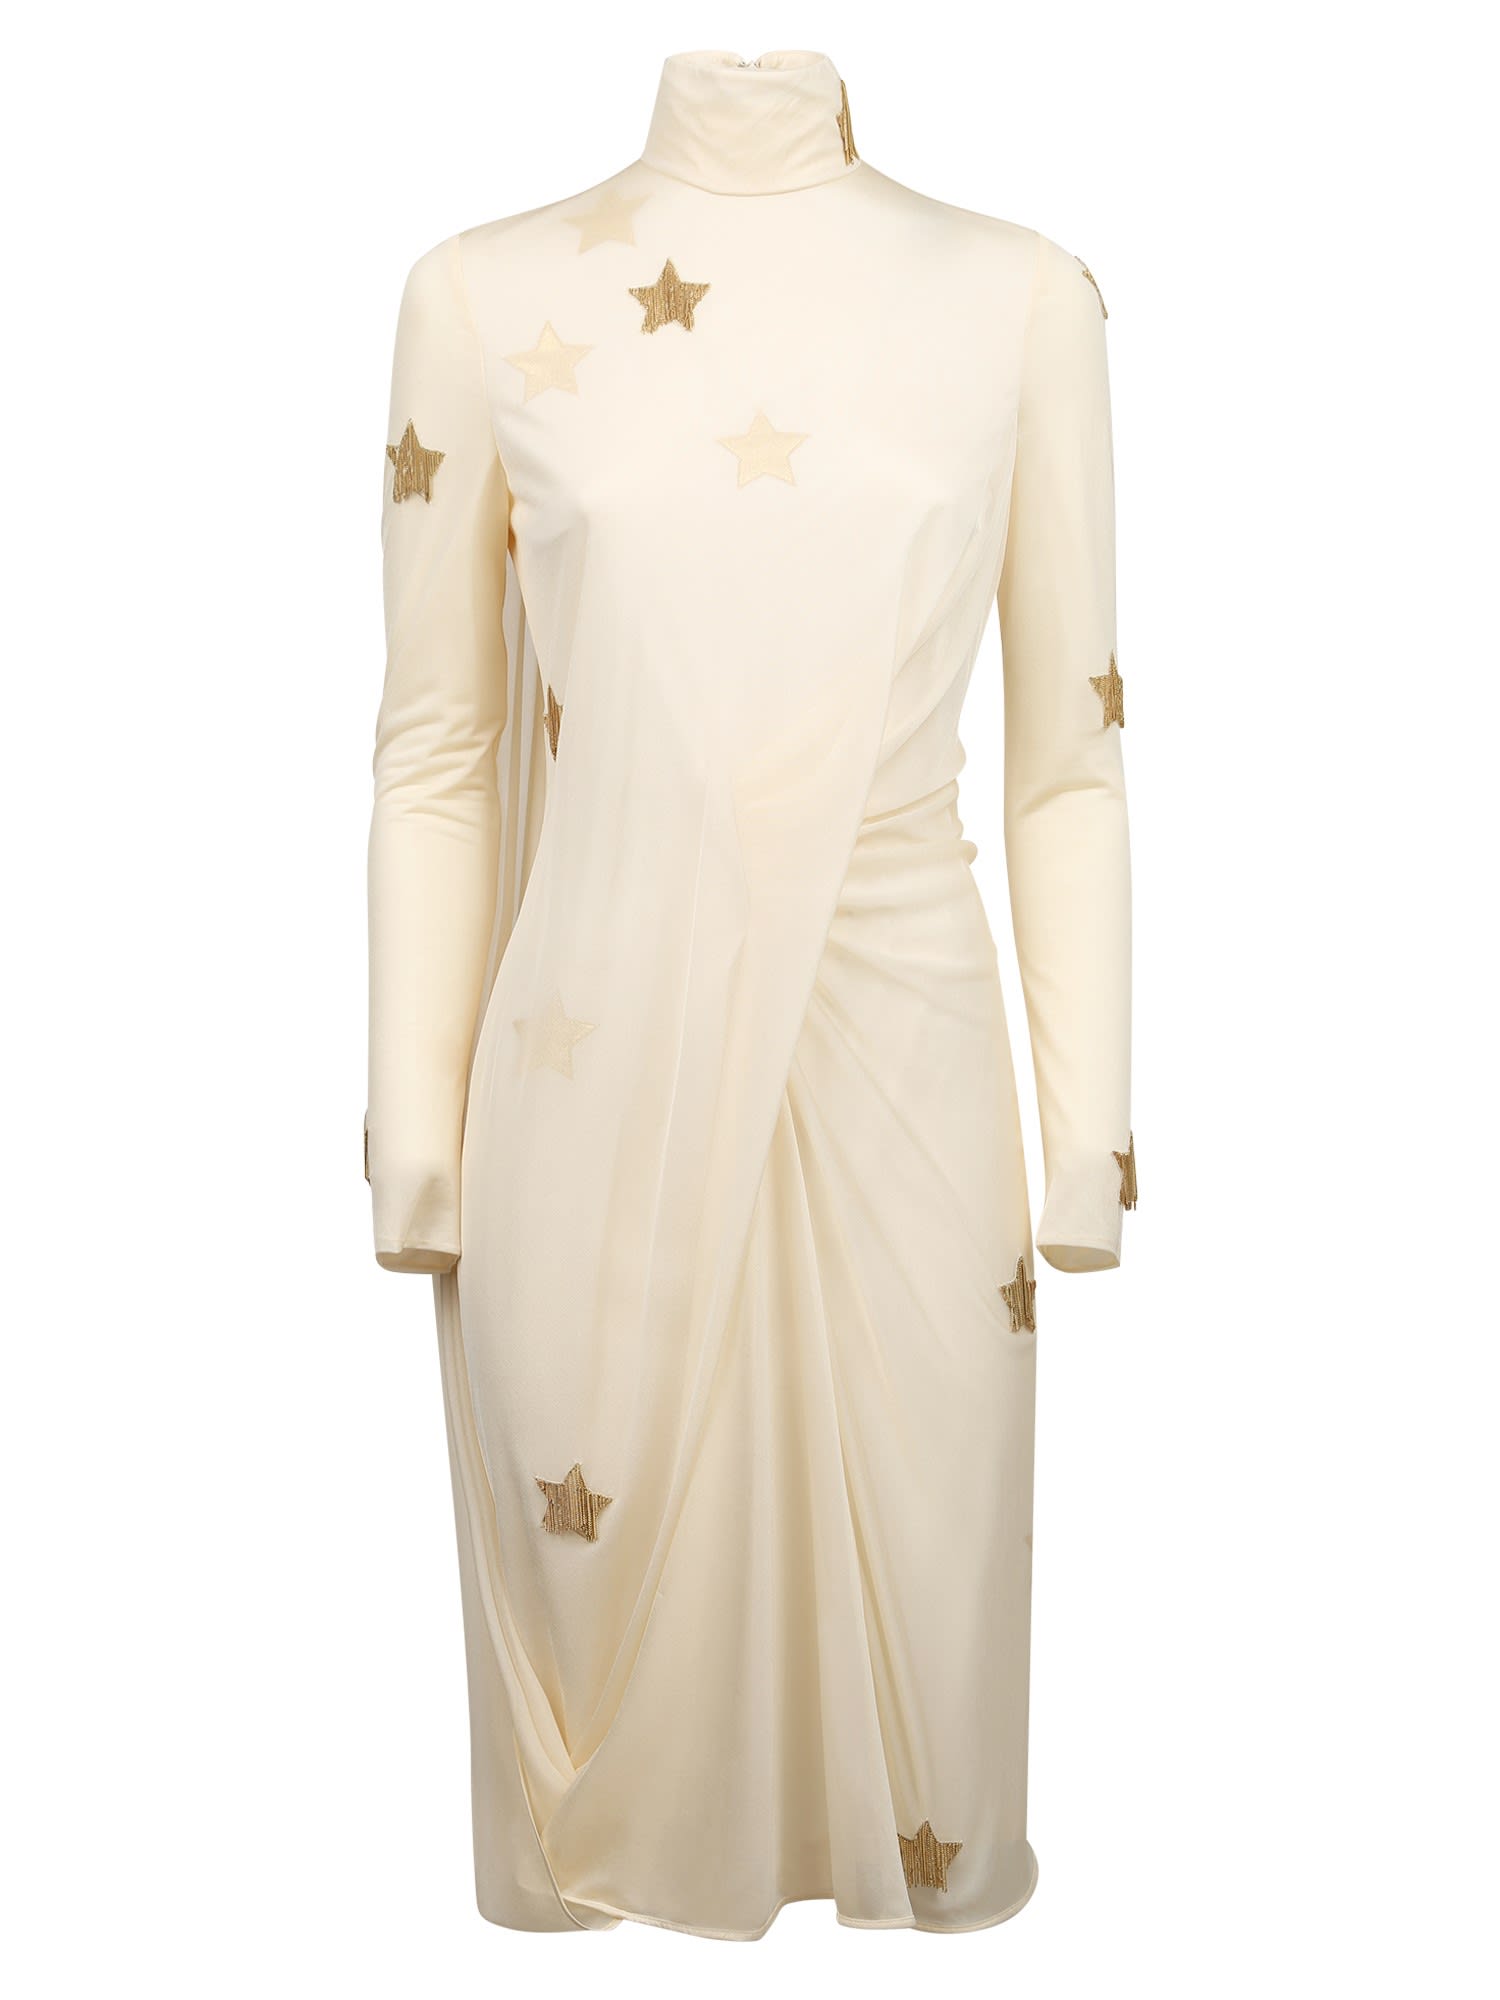 Burberry Star-pattern Dress